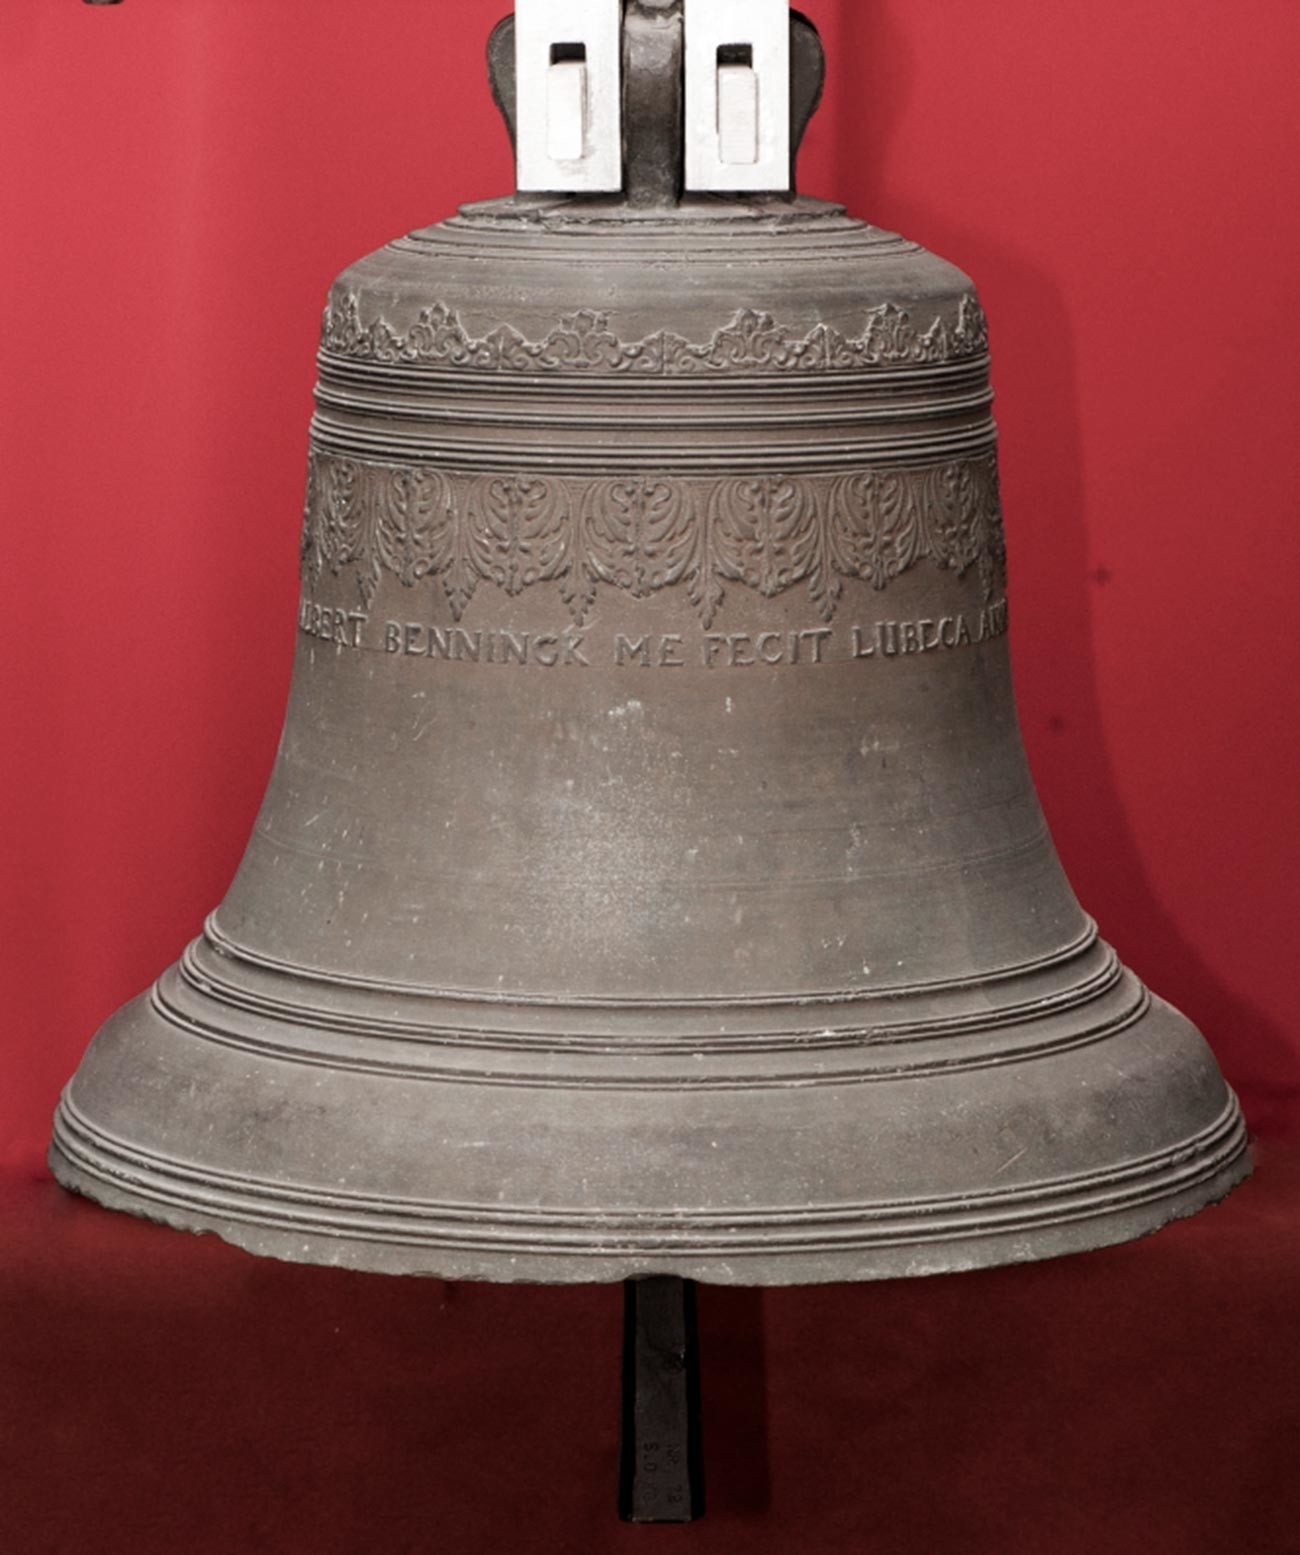 Benningov zvon v lokalnem muzeju Staraja Russa
